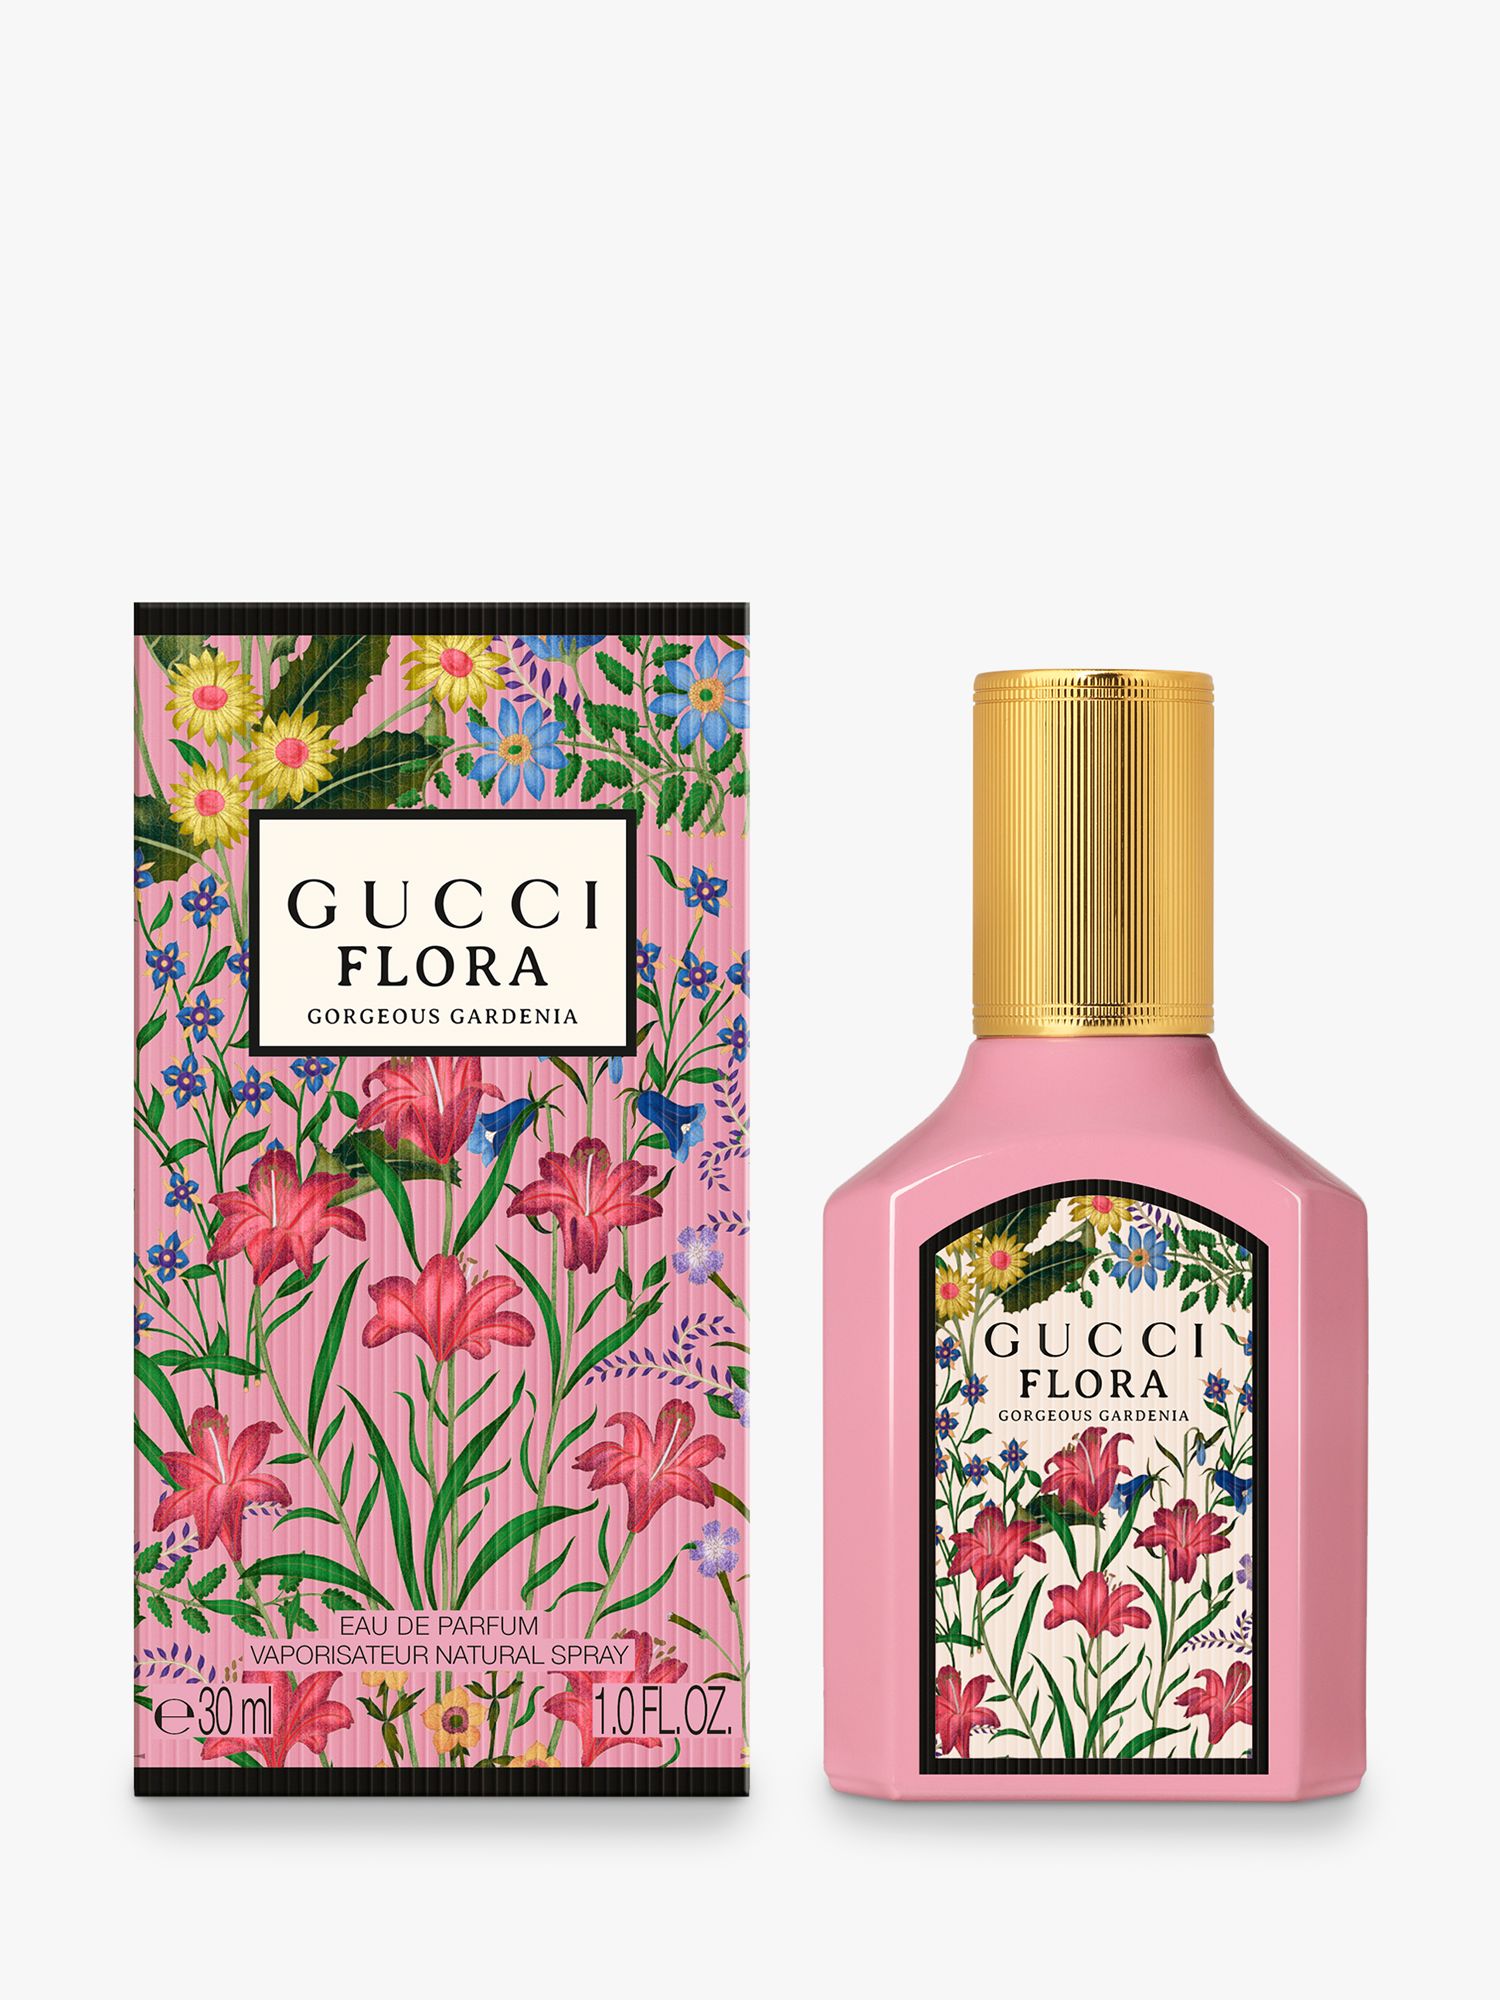 Gucci Flora Gorgeous Gardenia Eau de Parfum For Women, 30ml